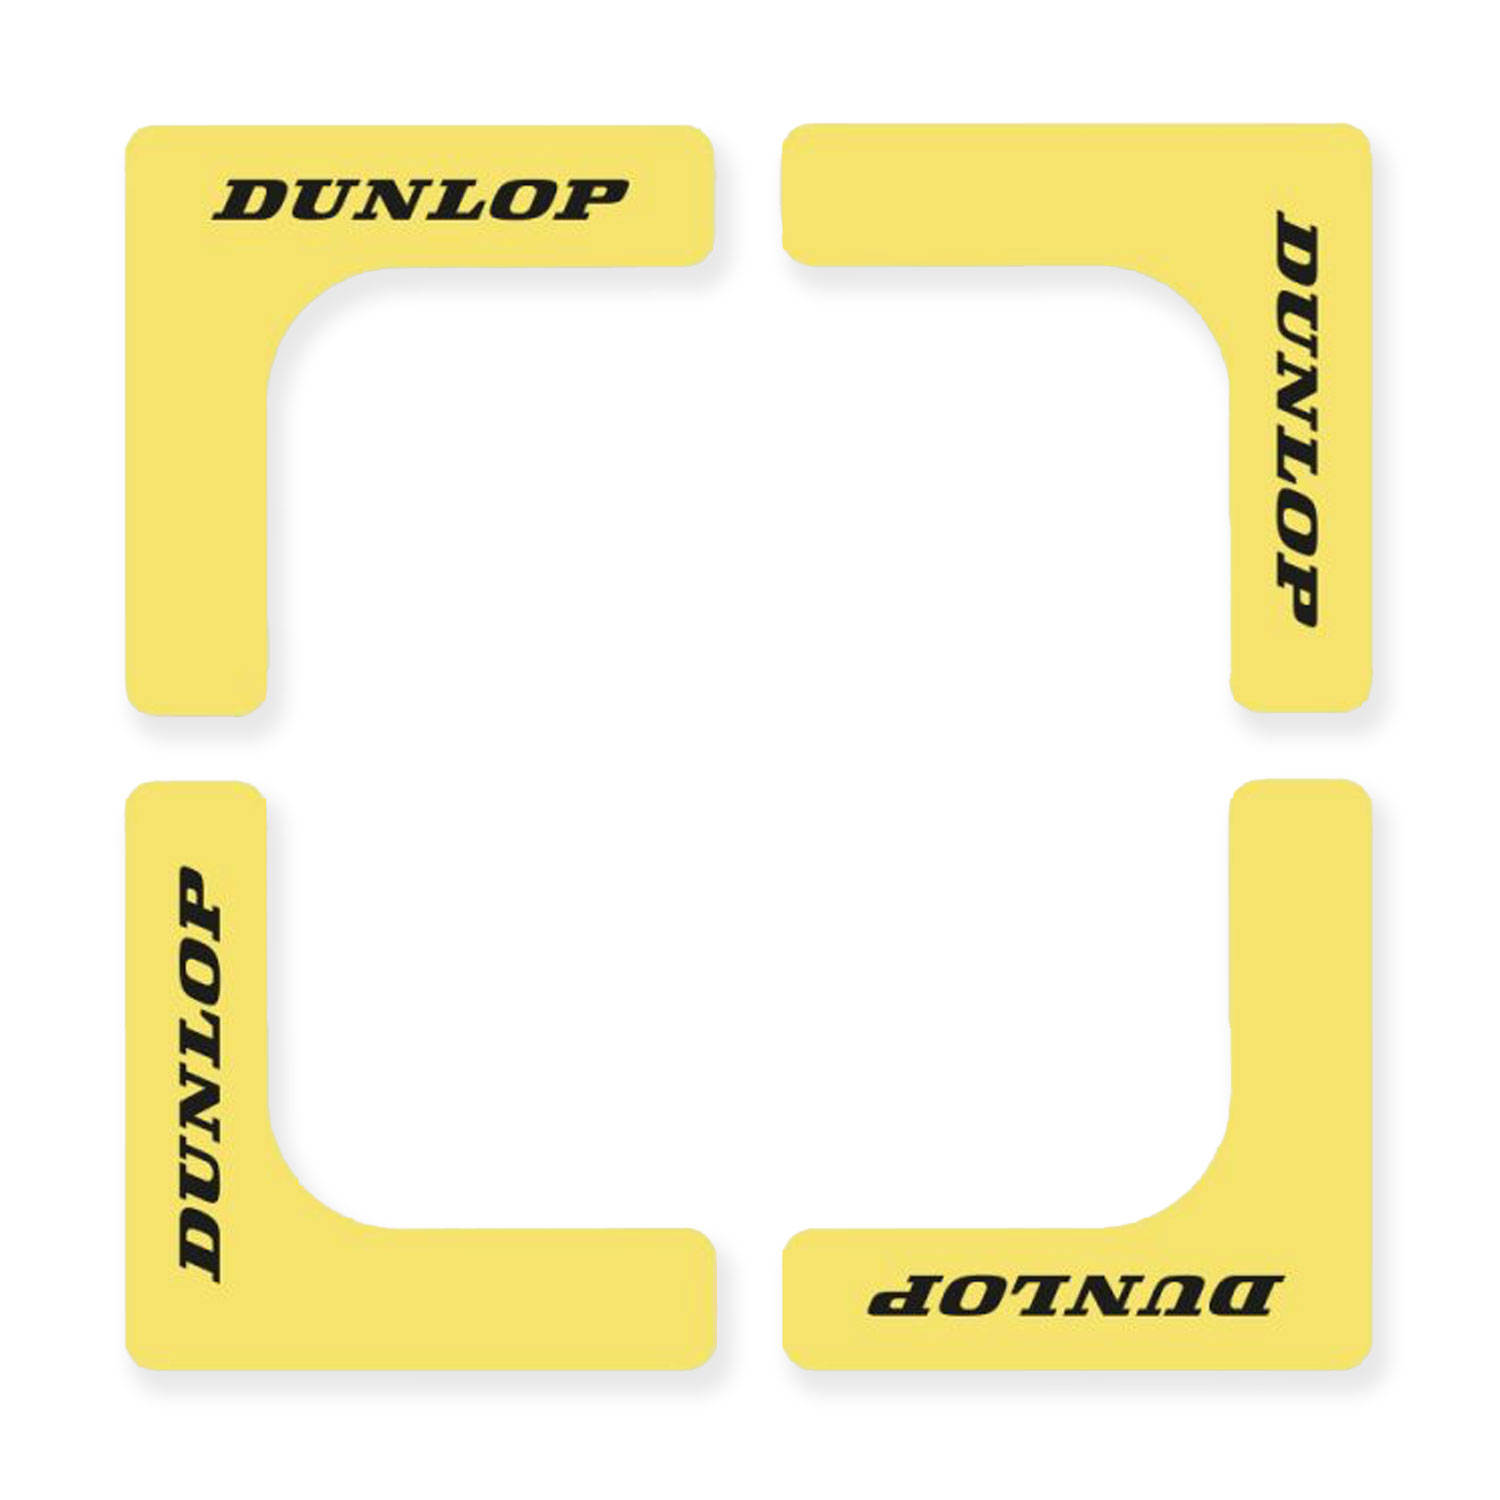 Dunlop Court Bordes - Yellow